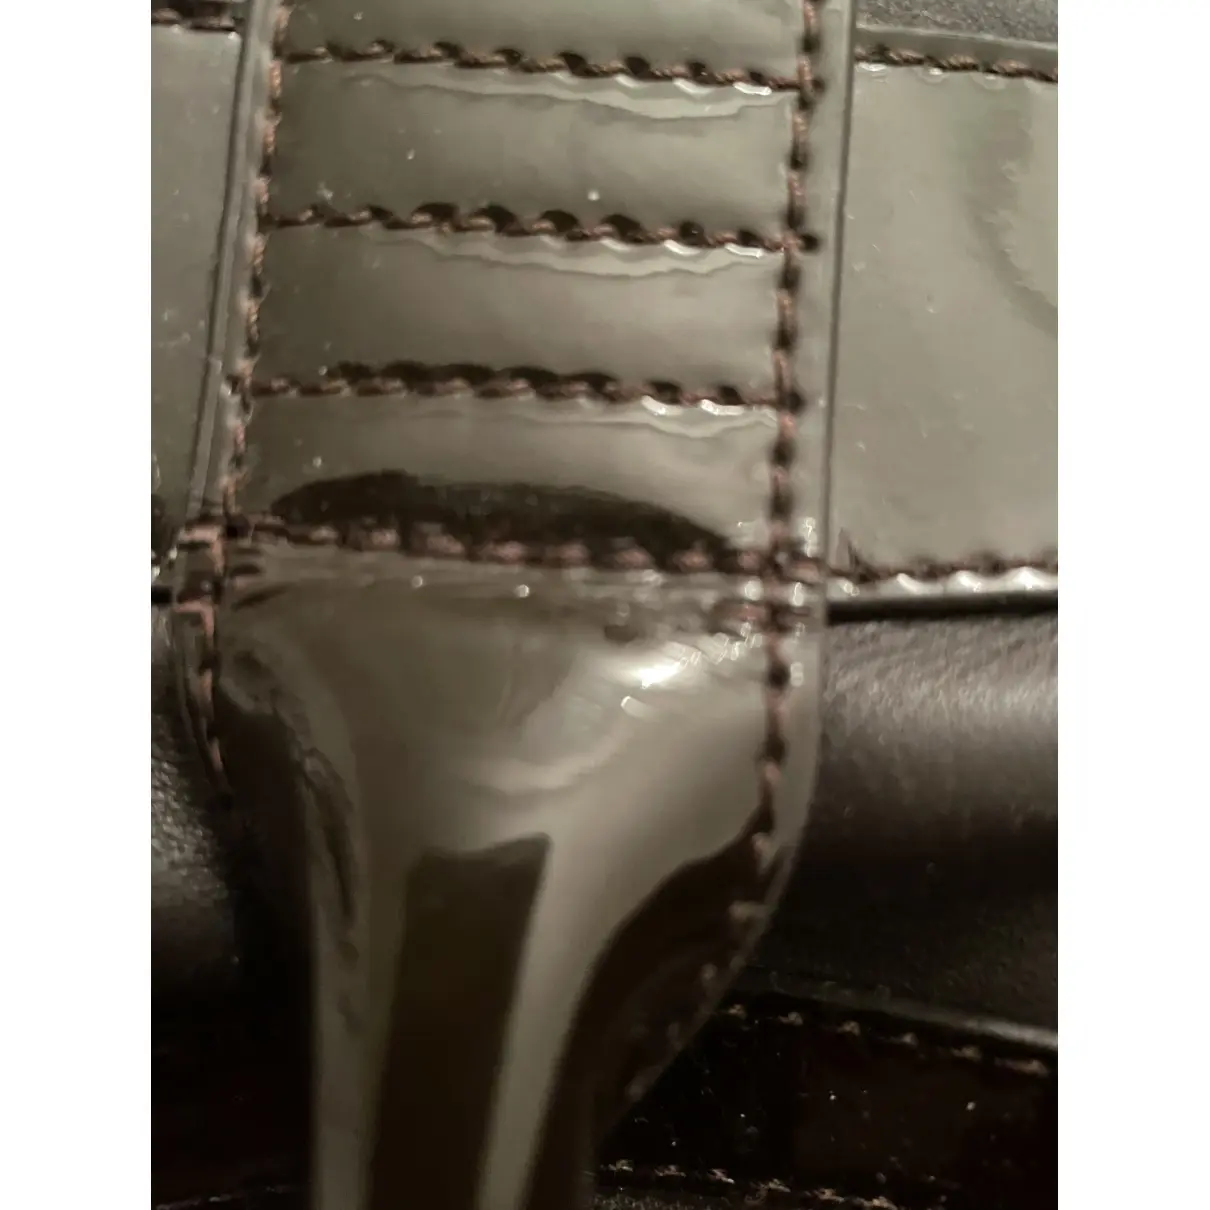 Leather 48h bag SERGE BLANCO